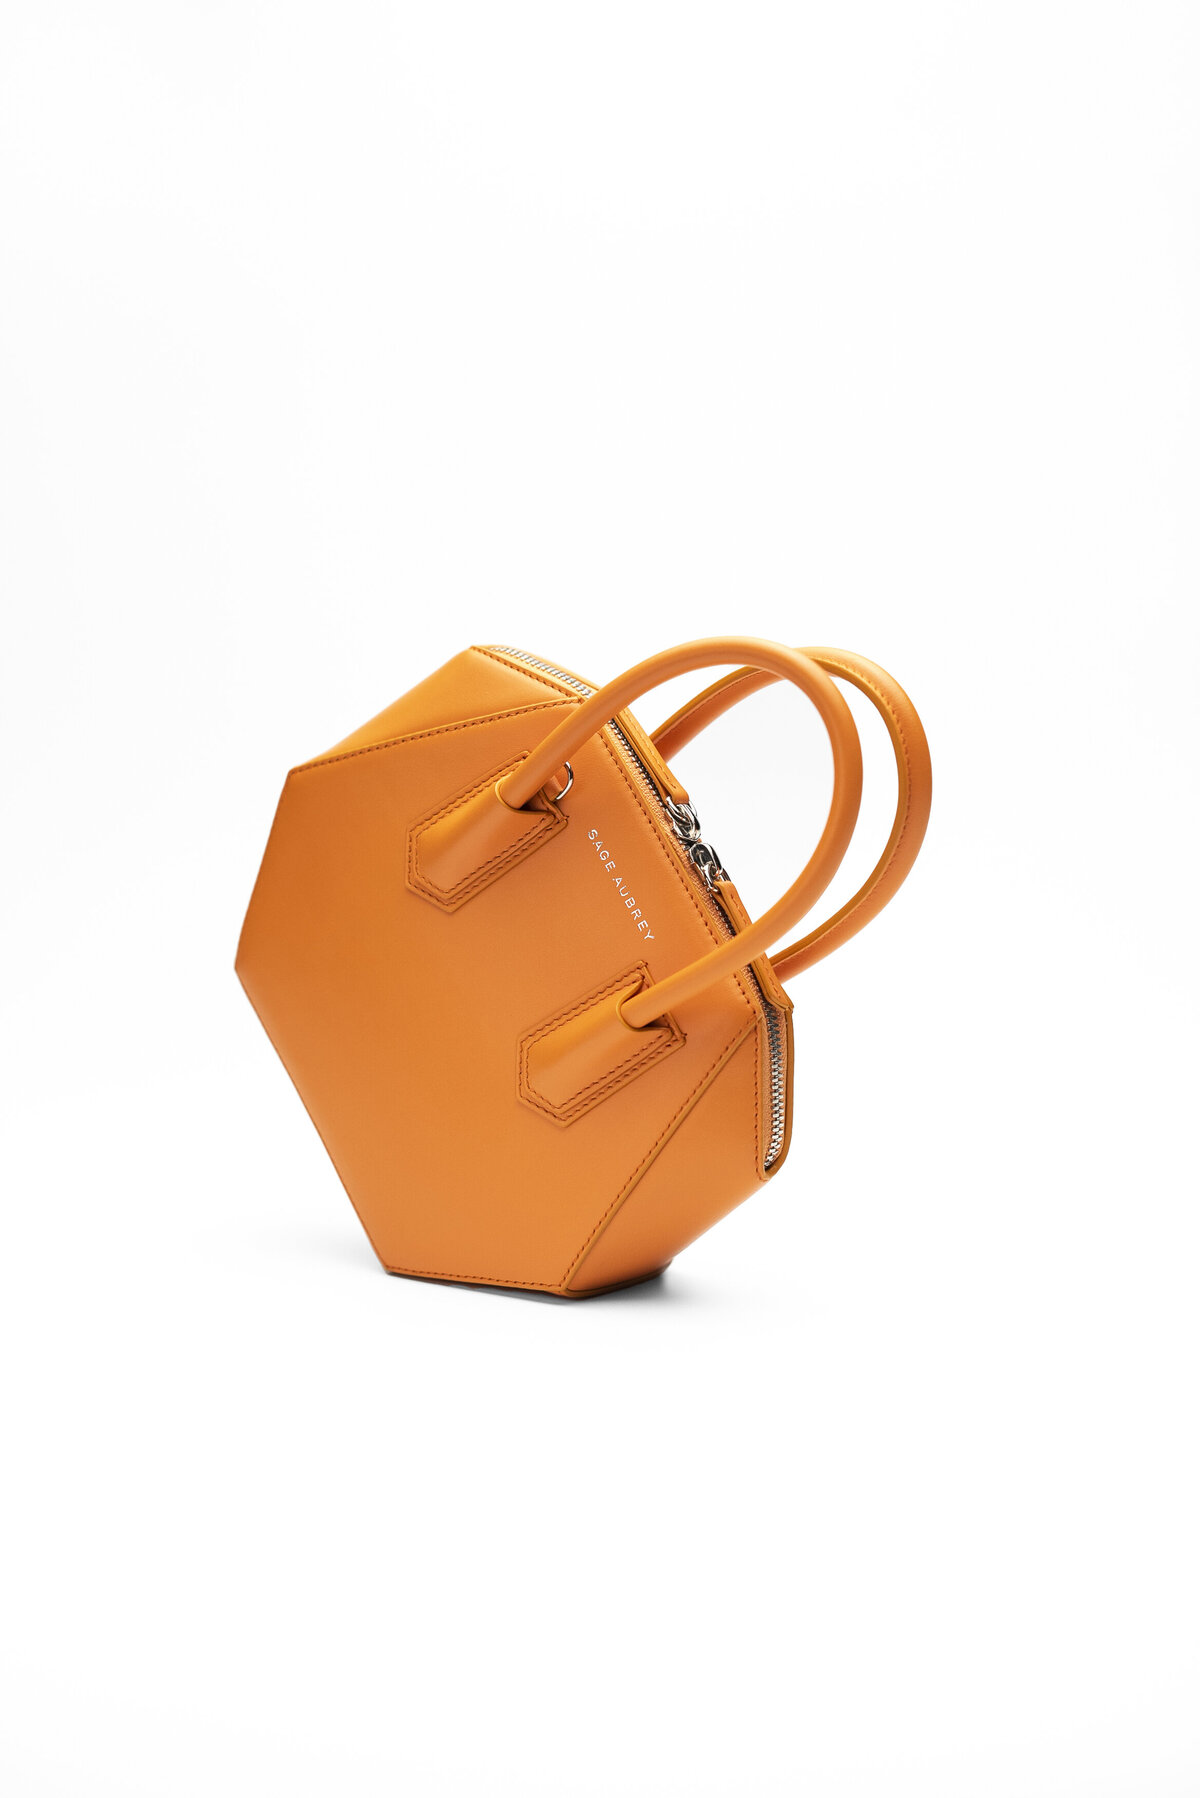 Sage Aubry geometric leather purse in orange